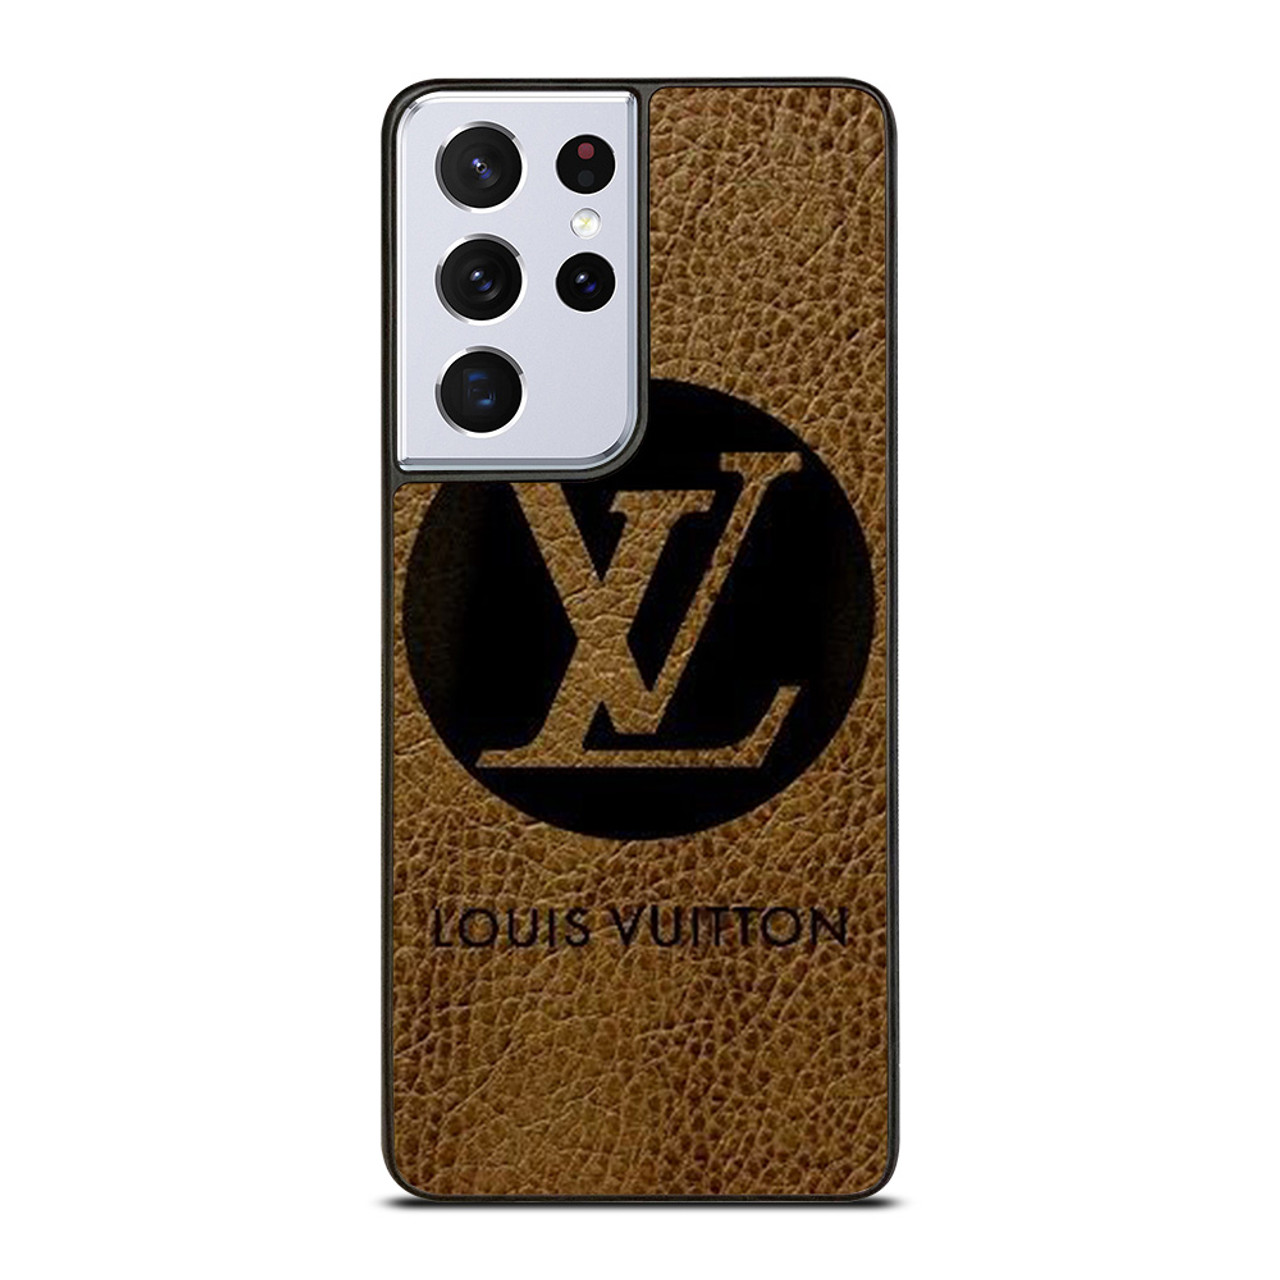 LOUIS VUITTON PARIS LV LOGO LEATHER Samsung Galaxy S21 Ultra Case Cover